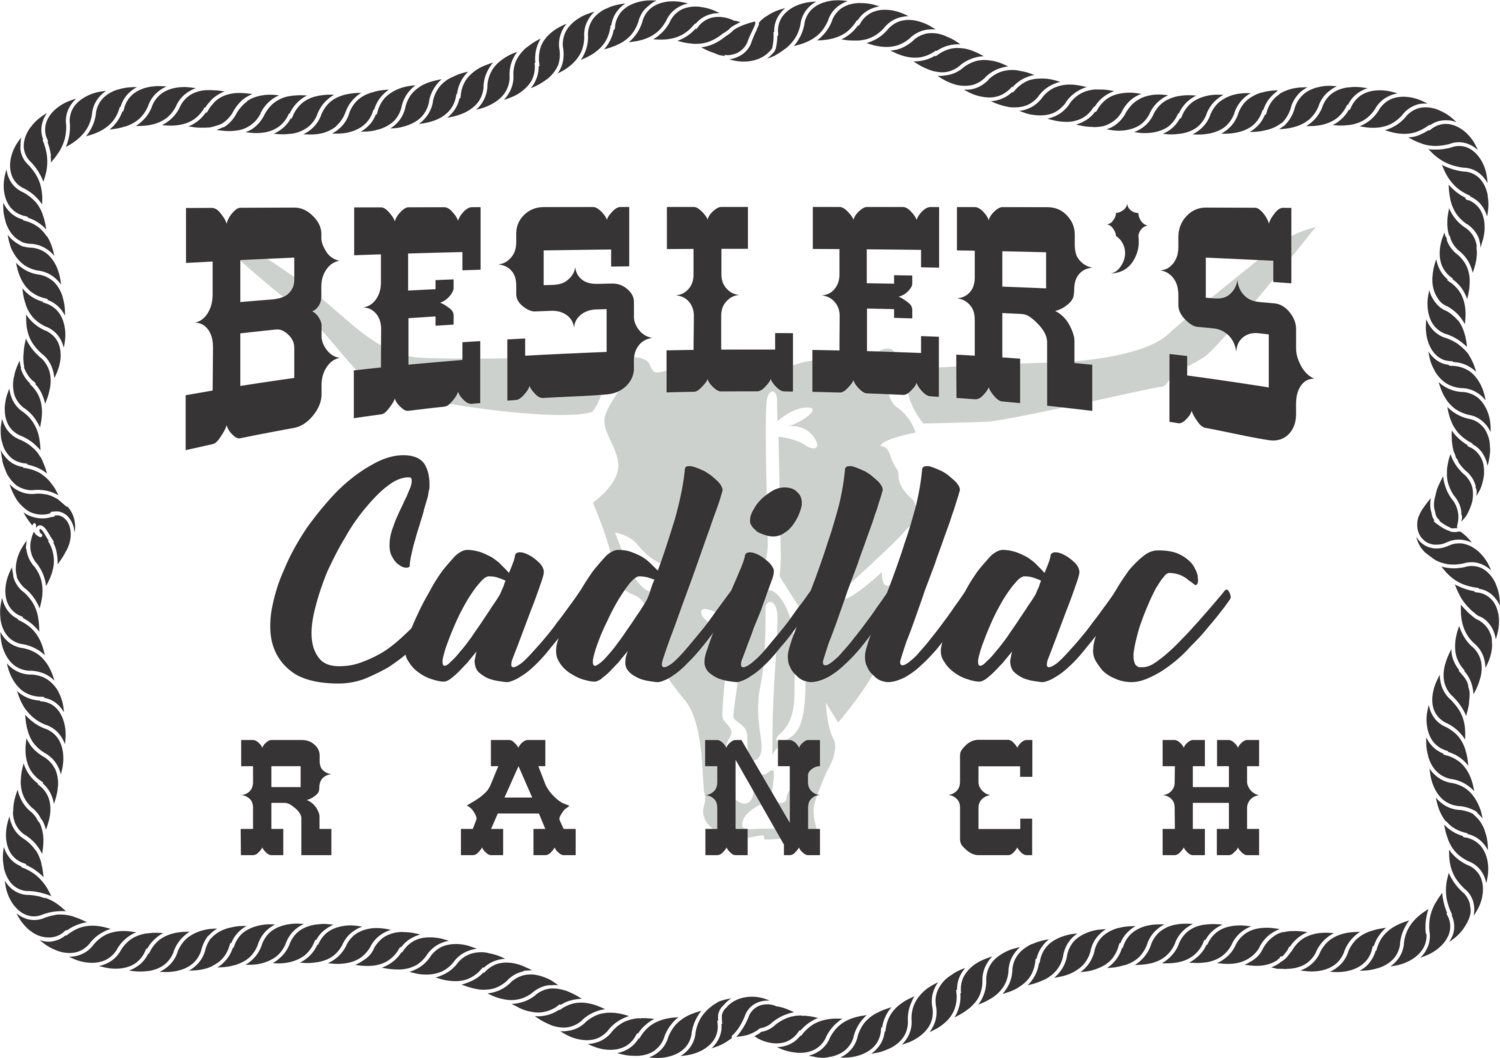 Besler's Cadillac Ranch